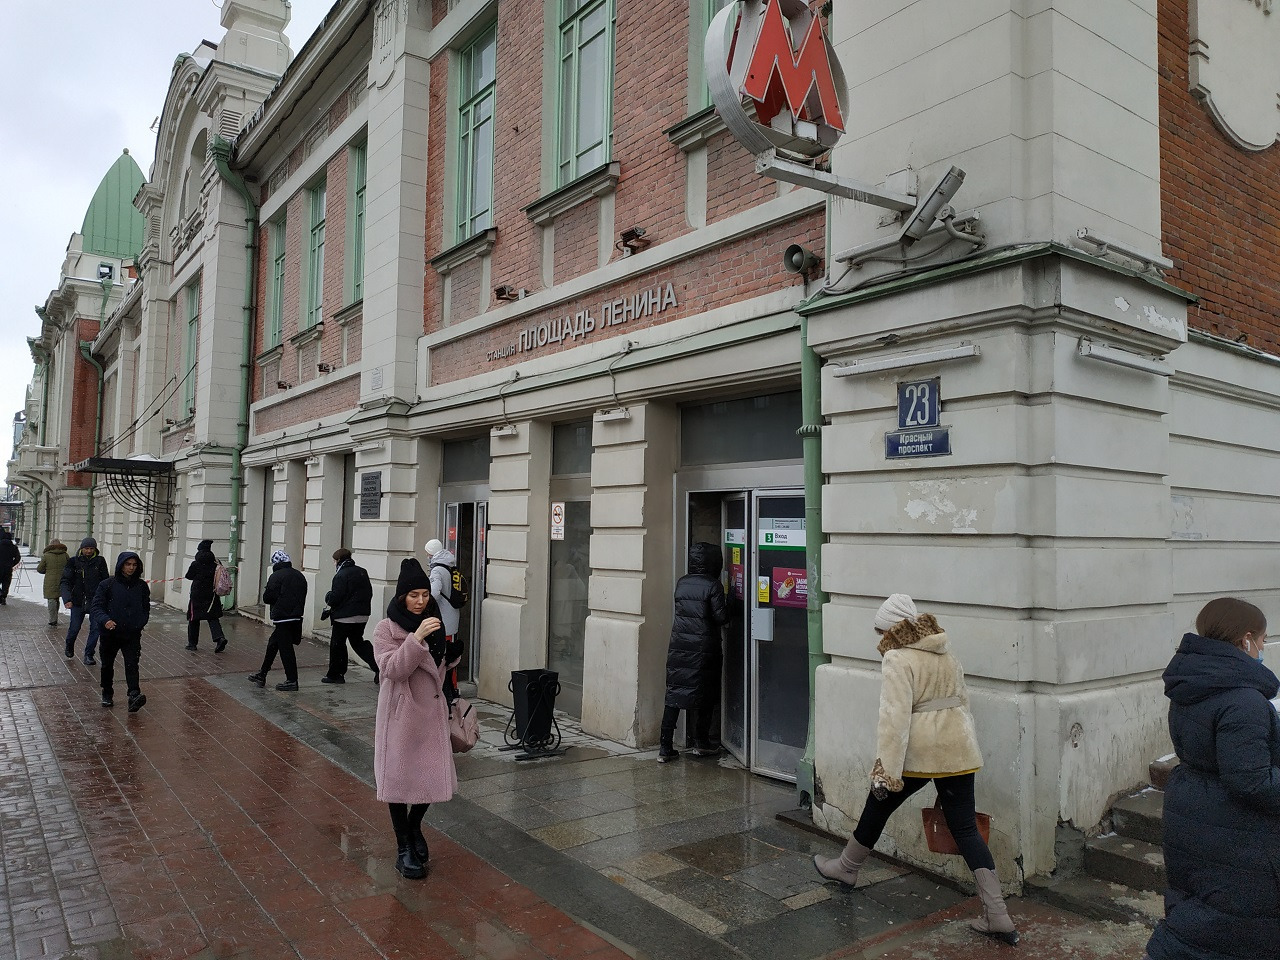 Новосибирск, вход на станцию метро "Площадь Ленина"